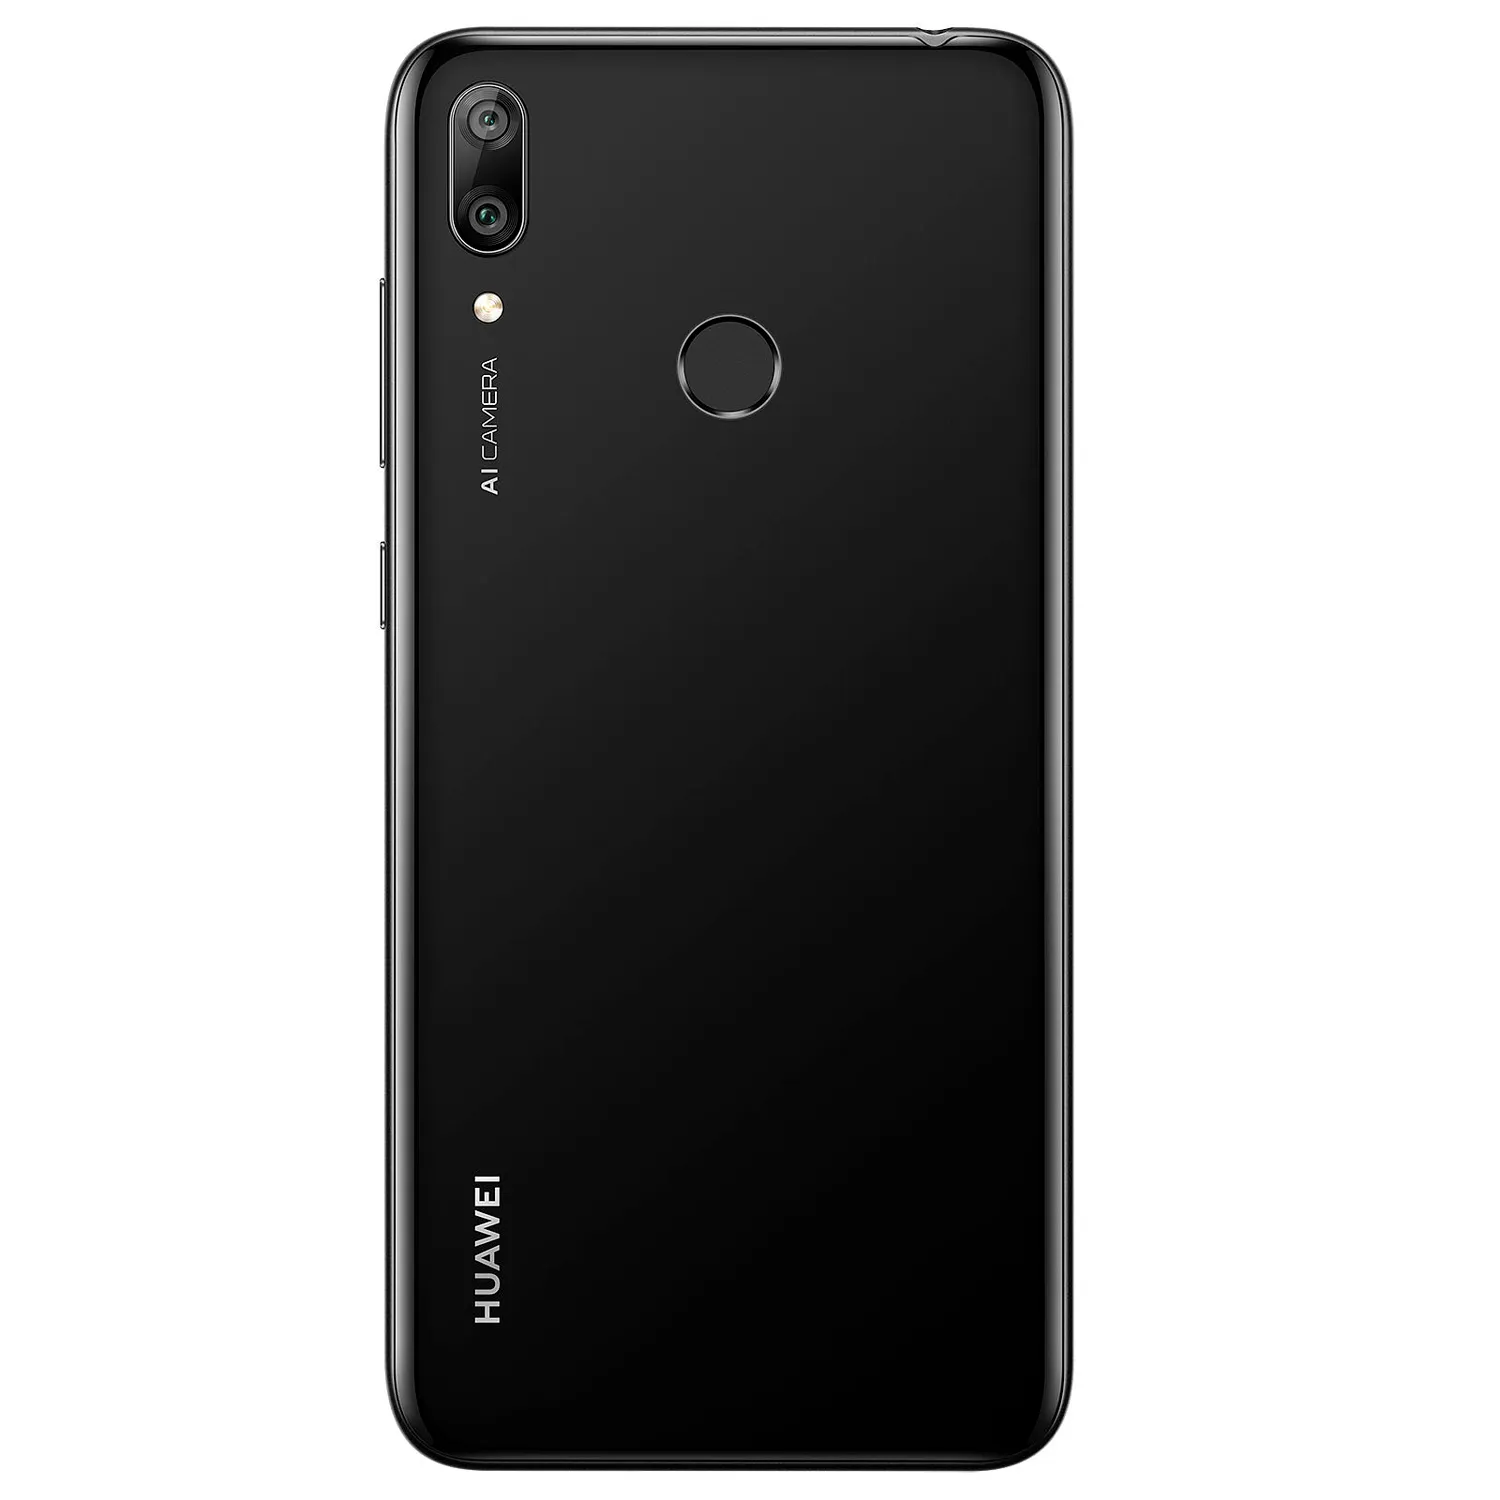 Celular Huawei Y7 2019 Negro 32GB + OBSEQUIO